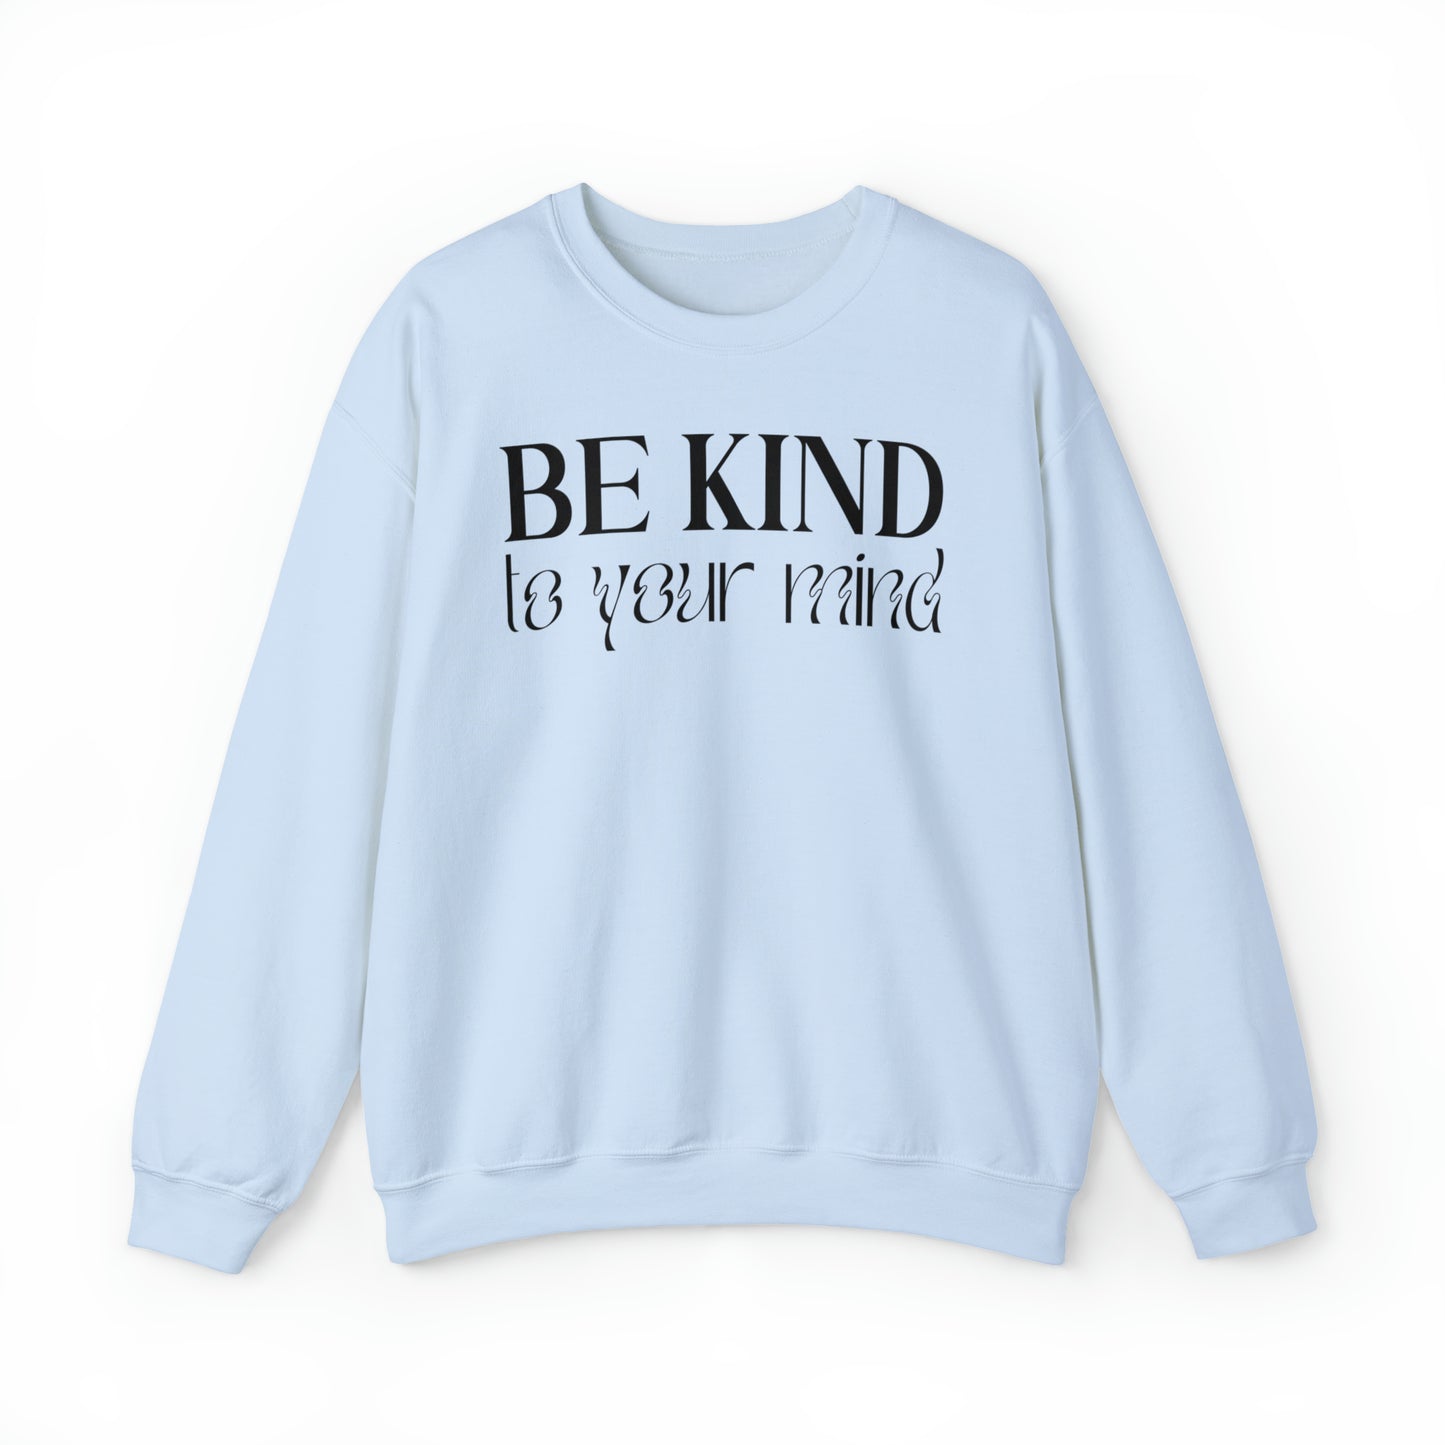 Be kind to you mind sweatshirt